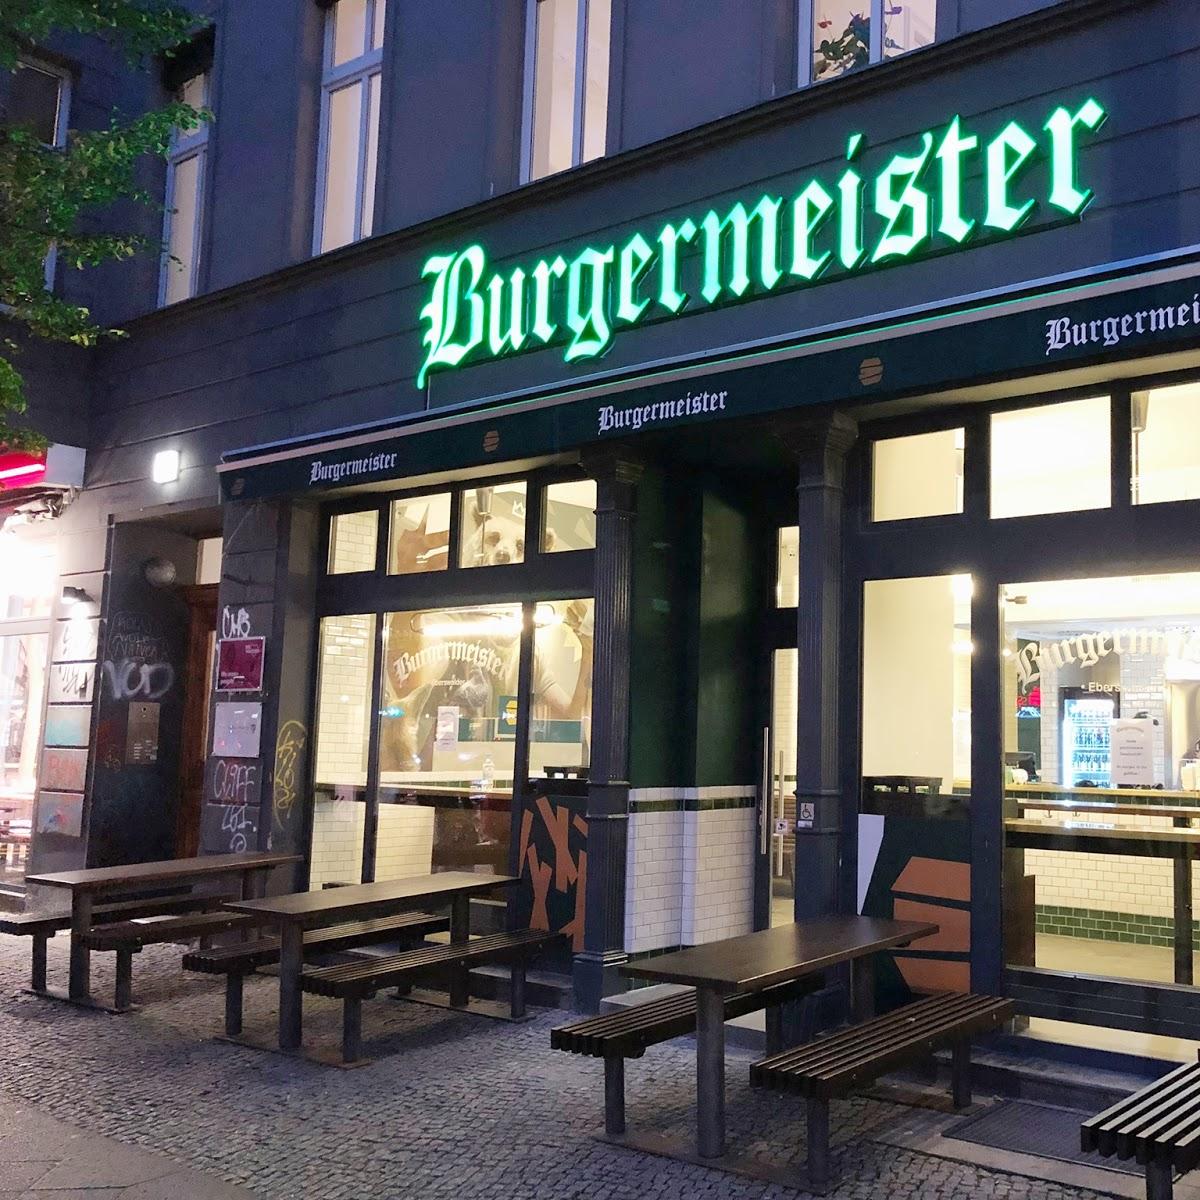 Restaurant "Burgermeister Eberswalder" in Berlin